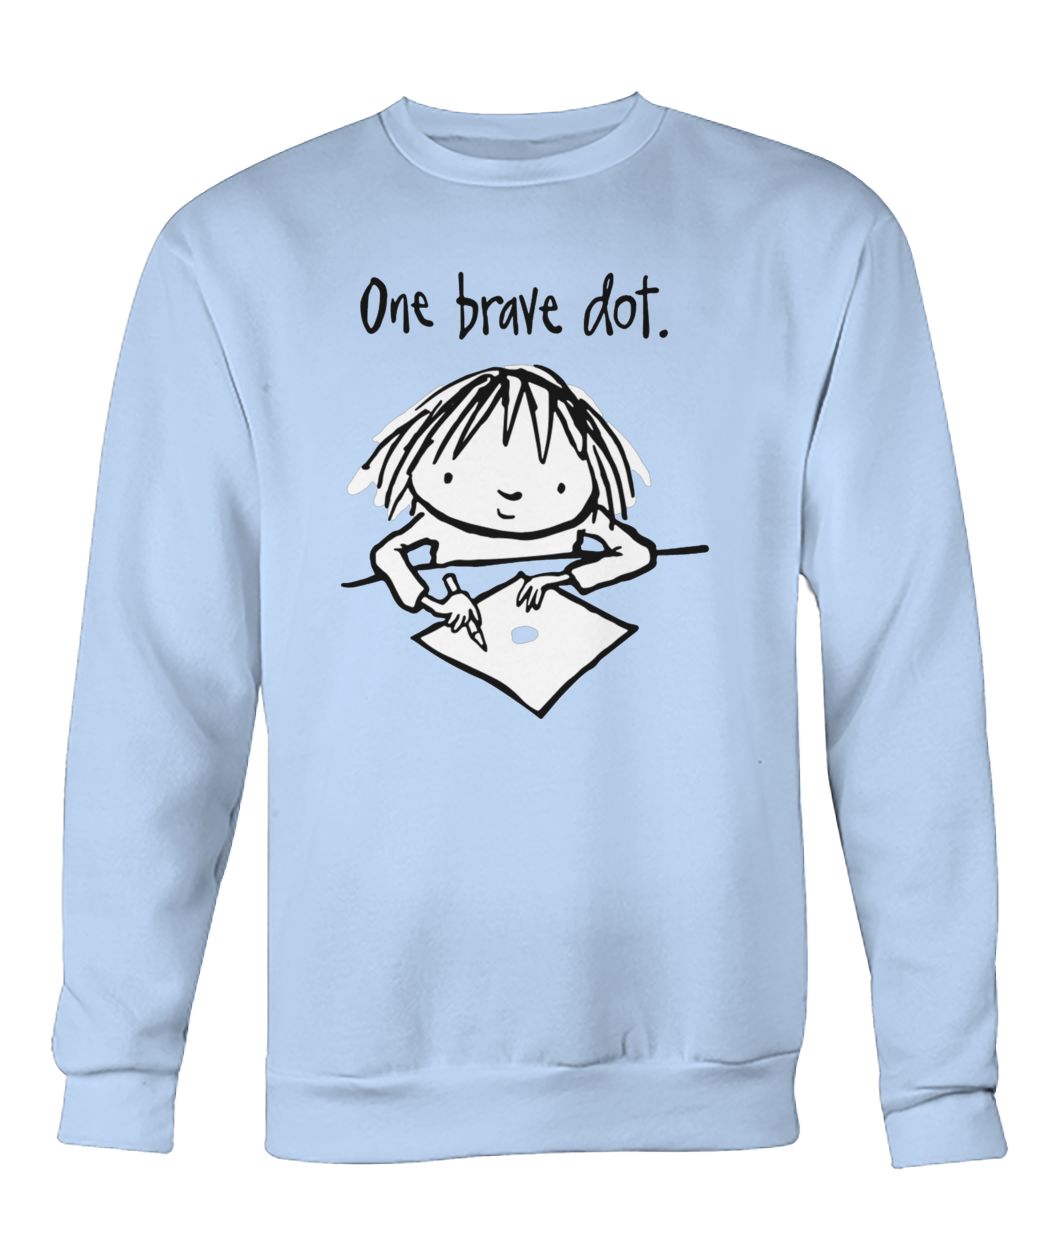 One brave dot crew neck sweatshirt